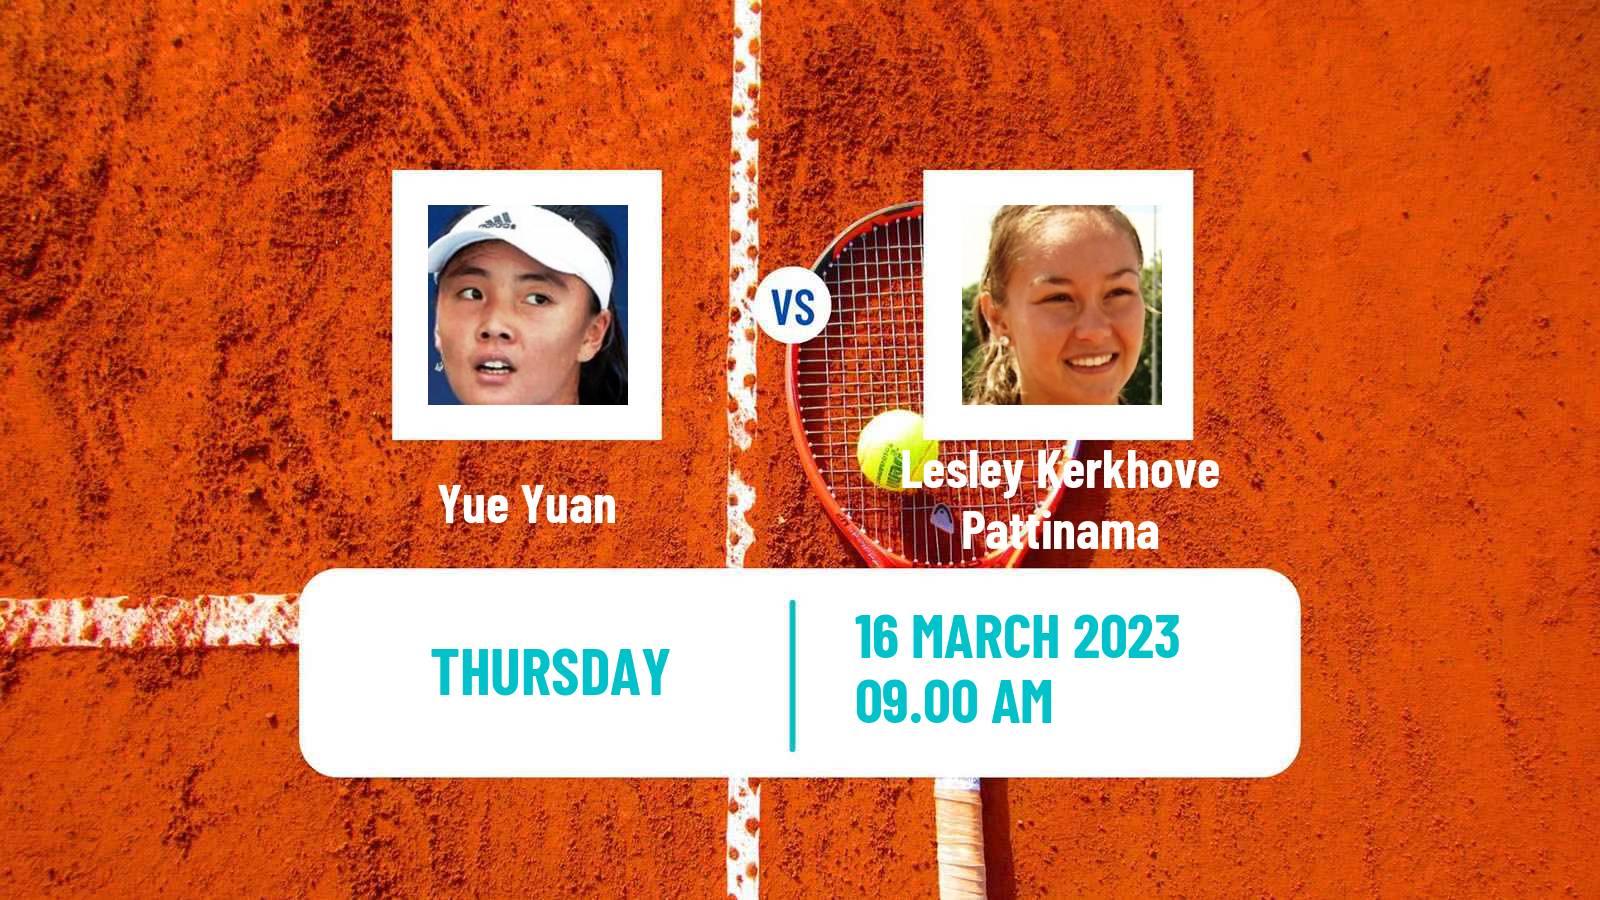 Tennis ITF Tournaments Yue Yuan - Lesley Kerkhove Pattinama